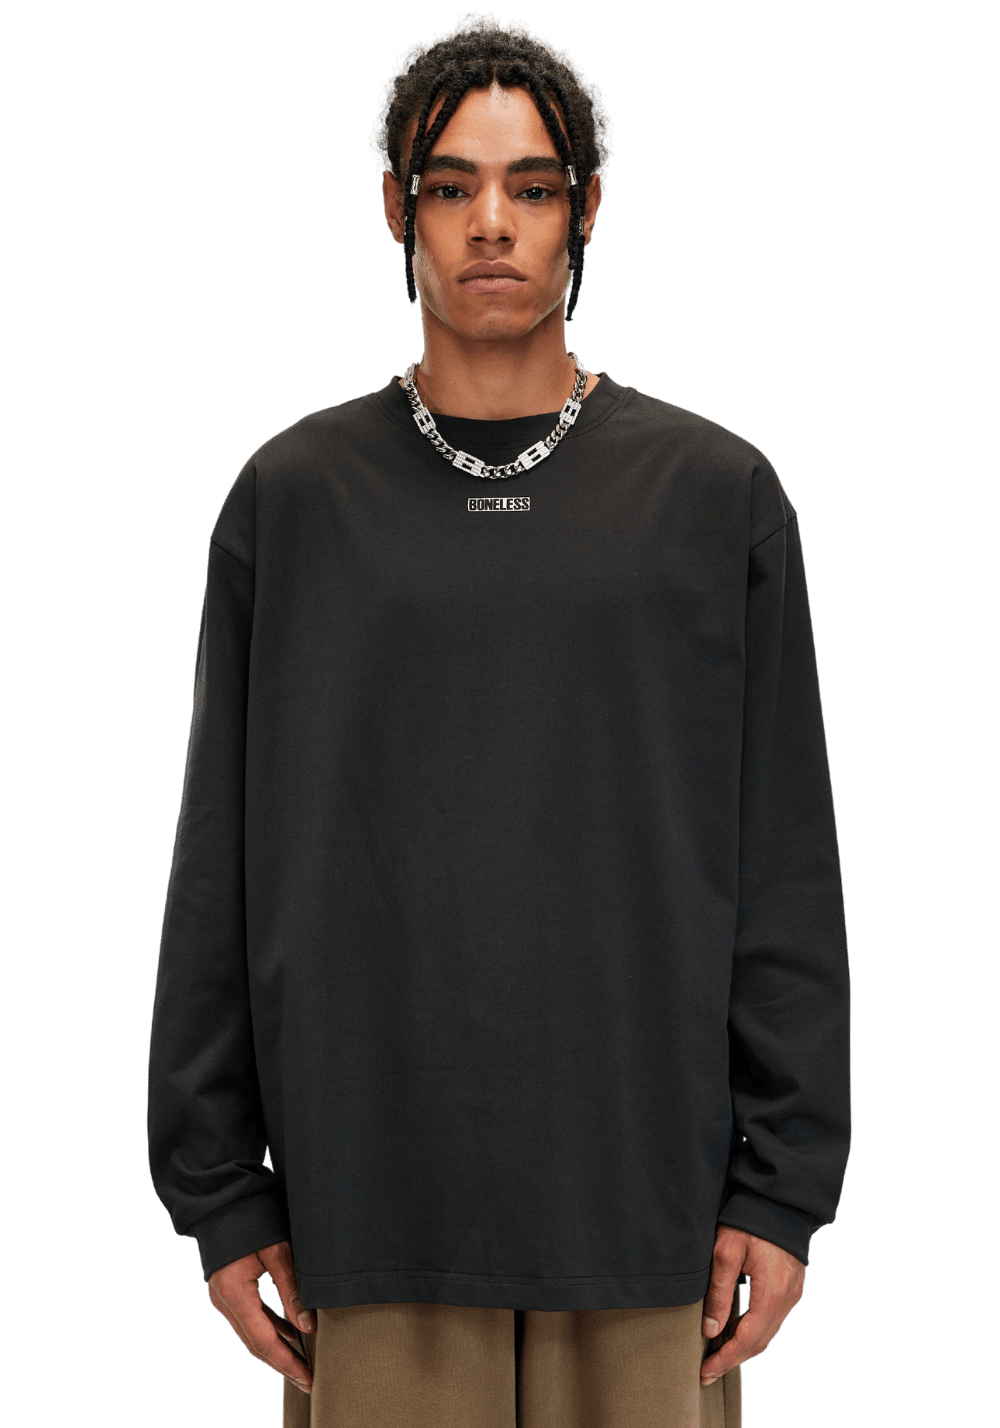 Mesh Grid Basic Sweatshirt - PSYLOS 1, Mesh Grid Basic Sweatshirt, Sweatshirts, Boneless, PSYLOS 1